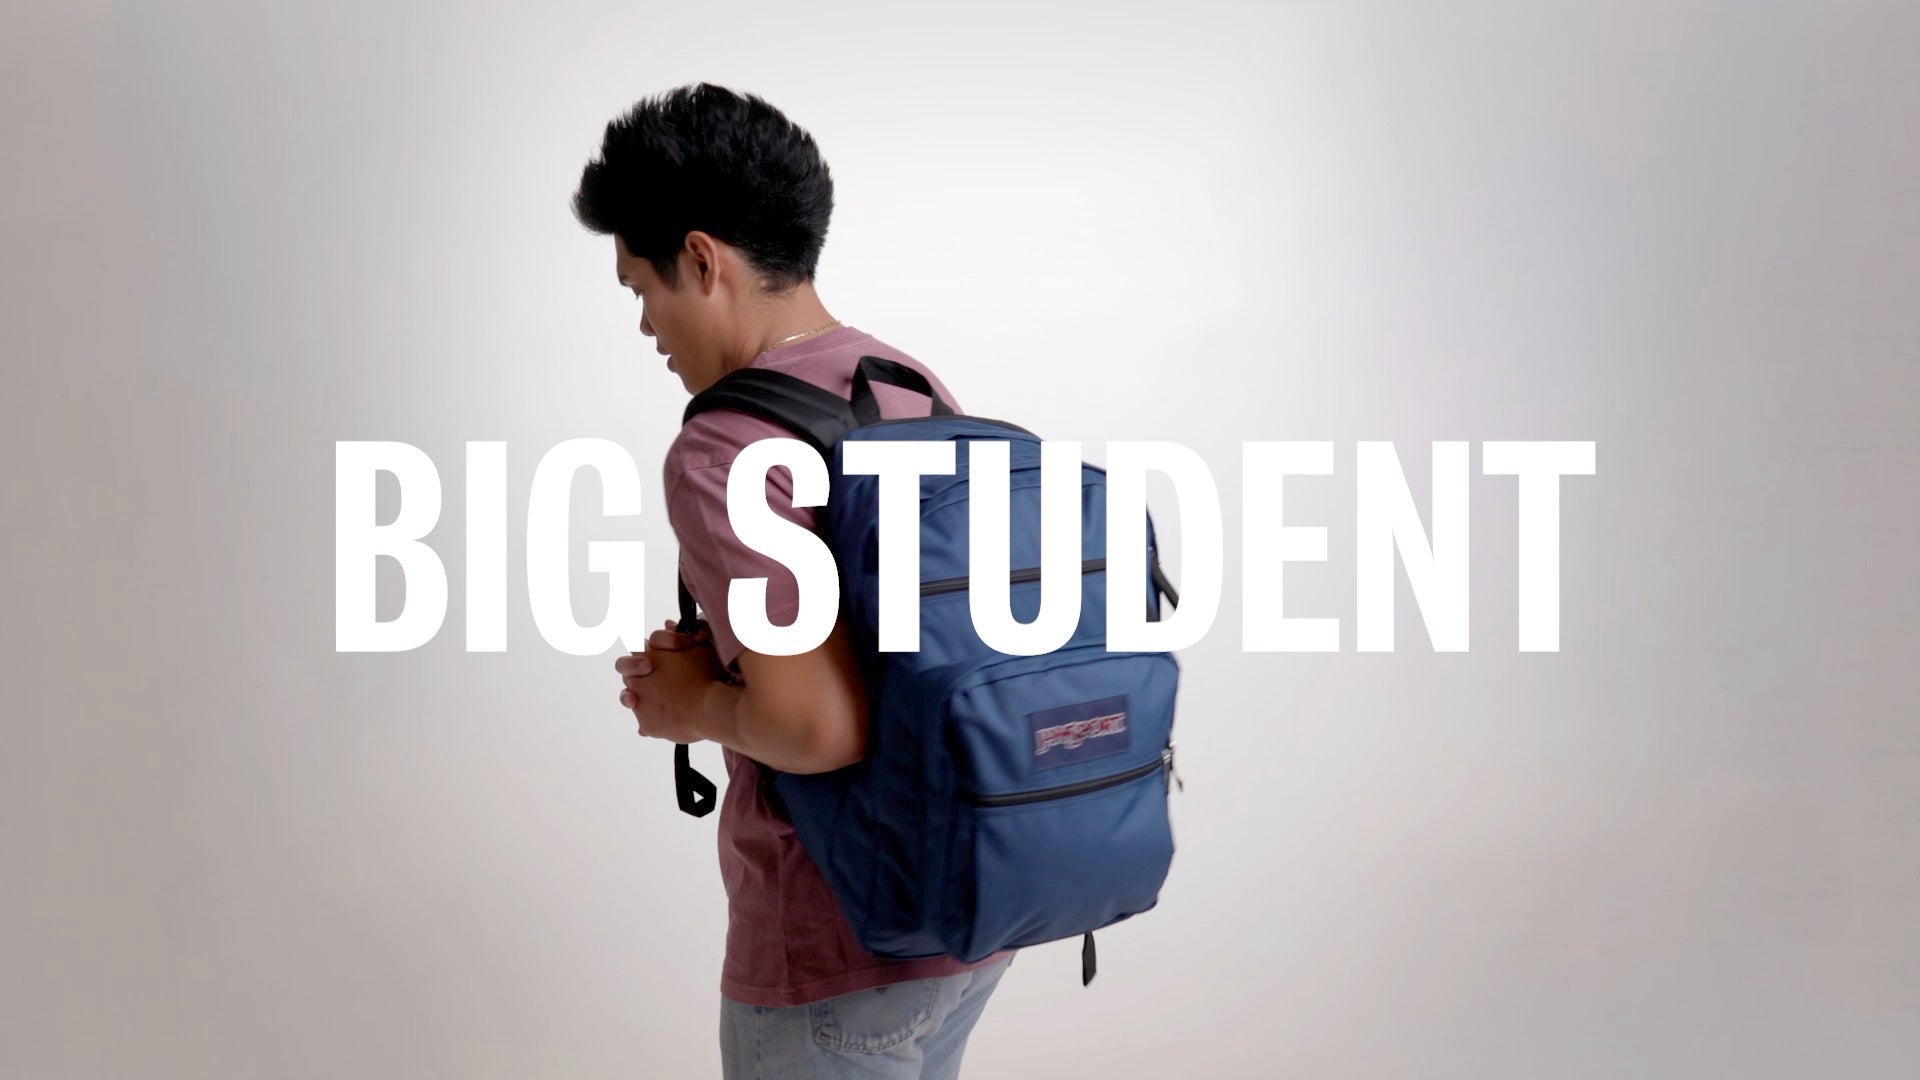 Load video: JanSport Big Student Backpack - Product Video